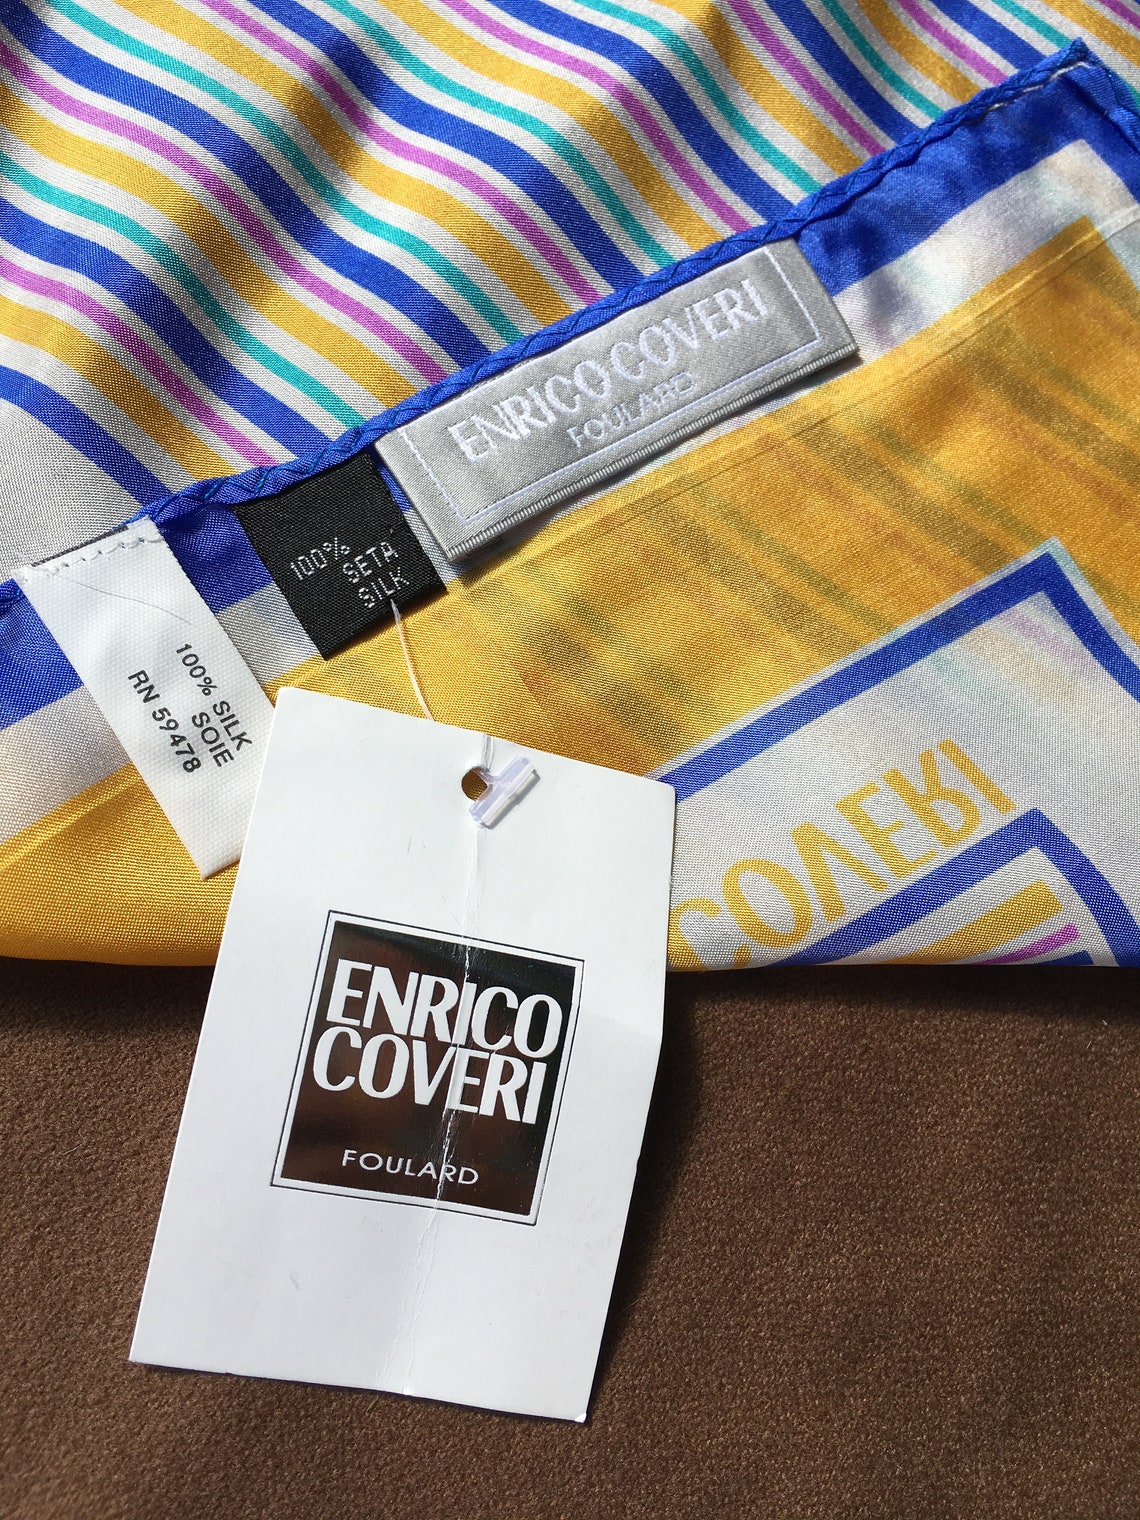 Enrico Coveri Silk Scarf Designer Scarf Striped Scarf | Etsy